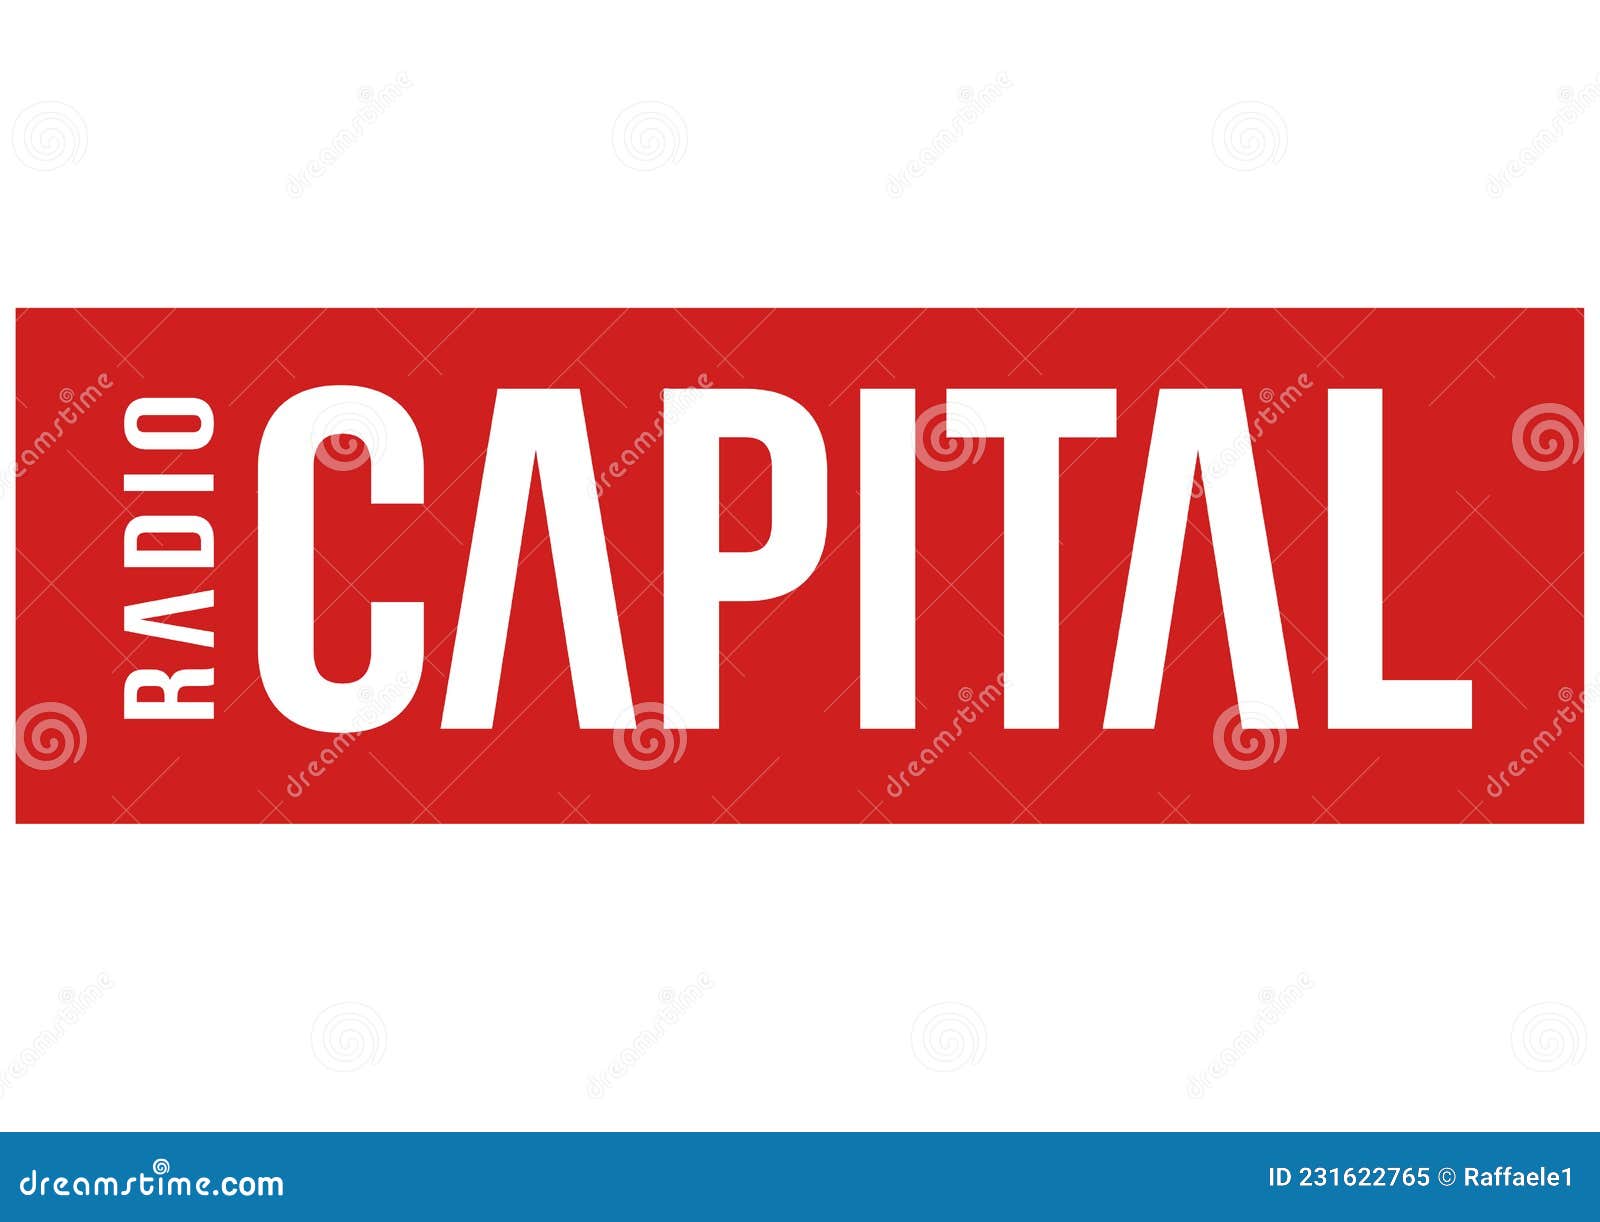 radio capital logo